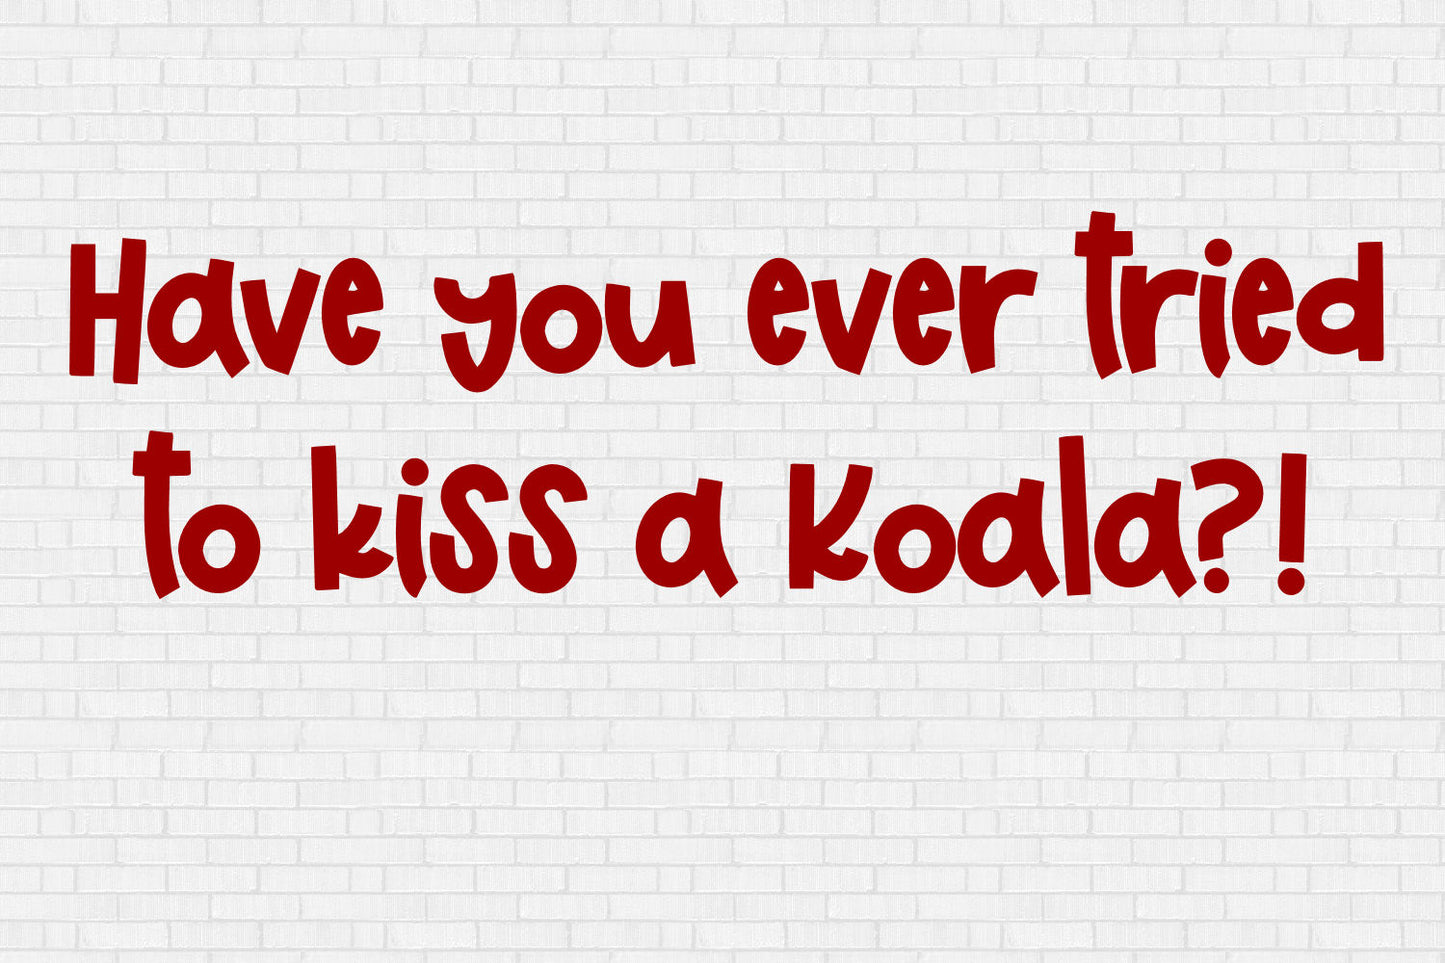 Koala Kisses - A Funky Chunky Handwritten Font